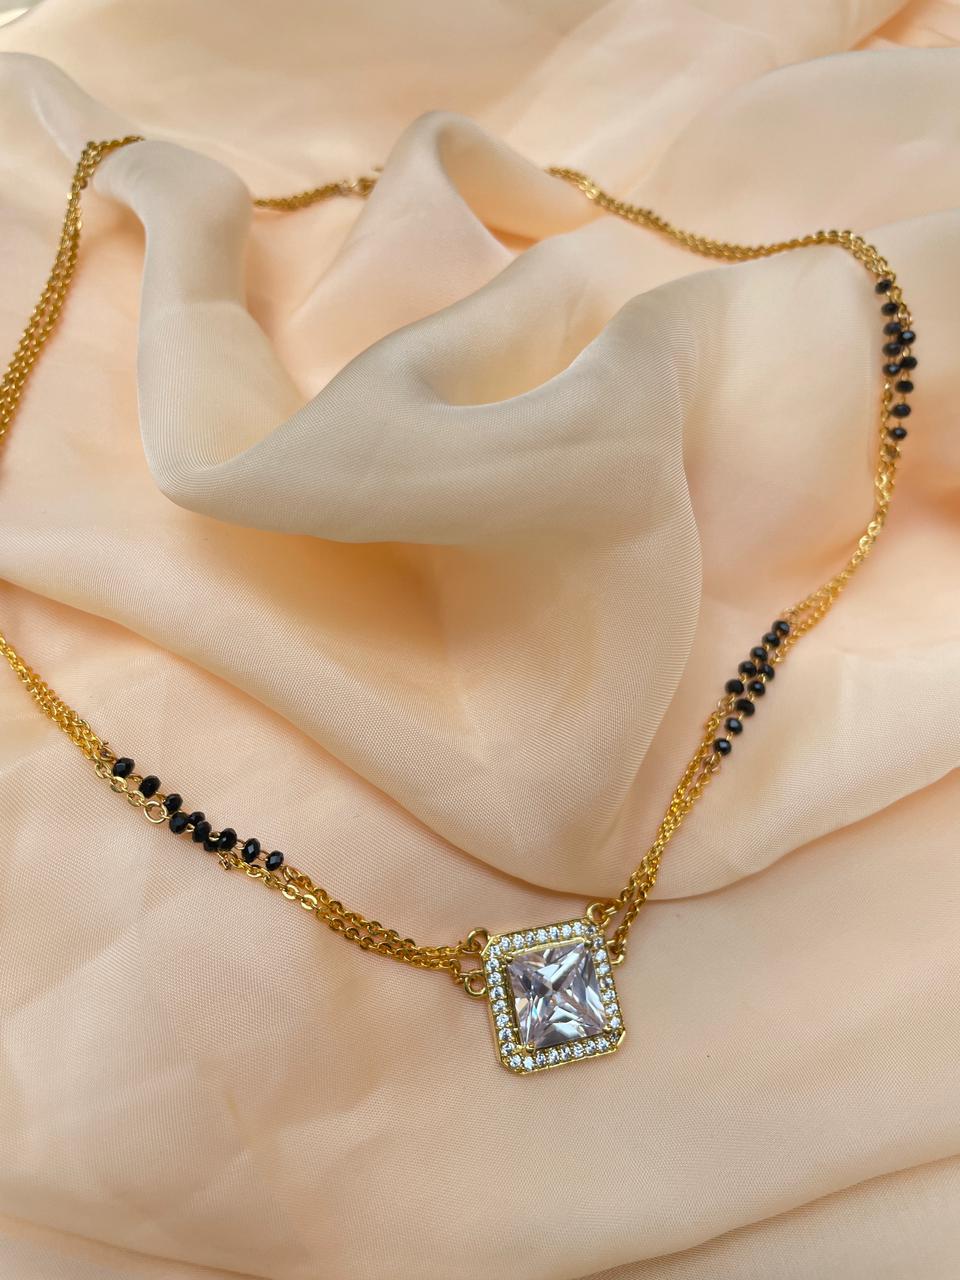 Sumati Singh Inspired From Kismat Ki Lakeeron Se Oversized American Diamond Mangalsutra - Abdesignsjewellery